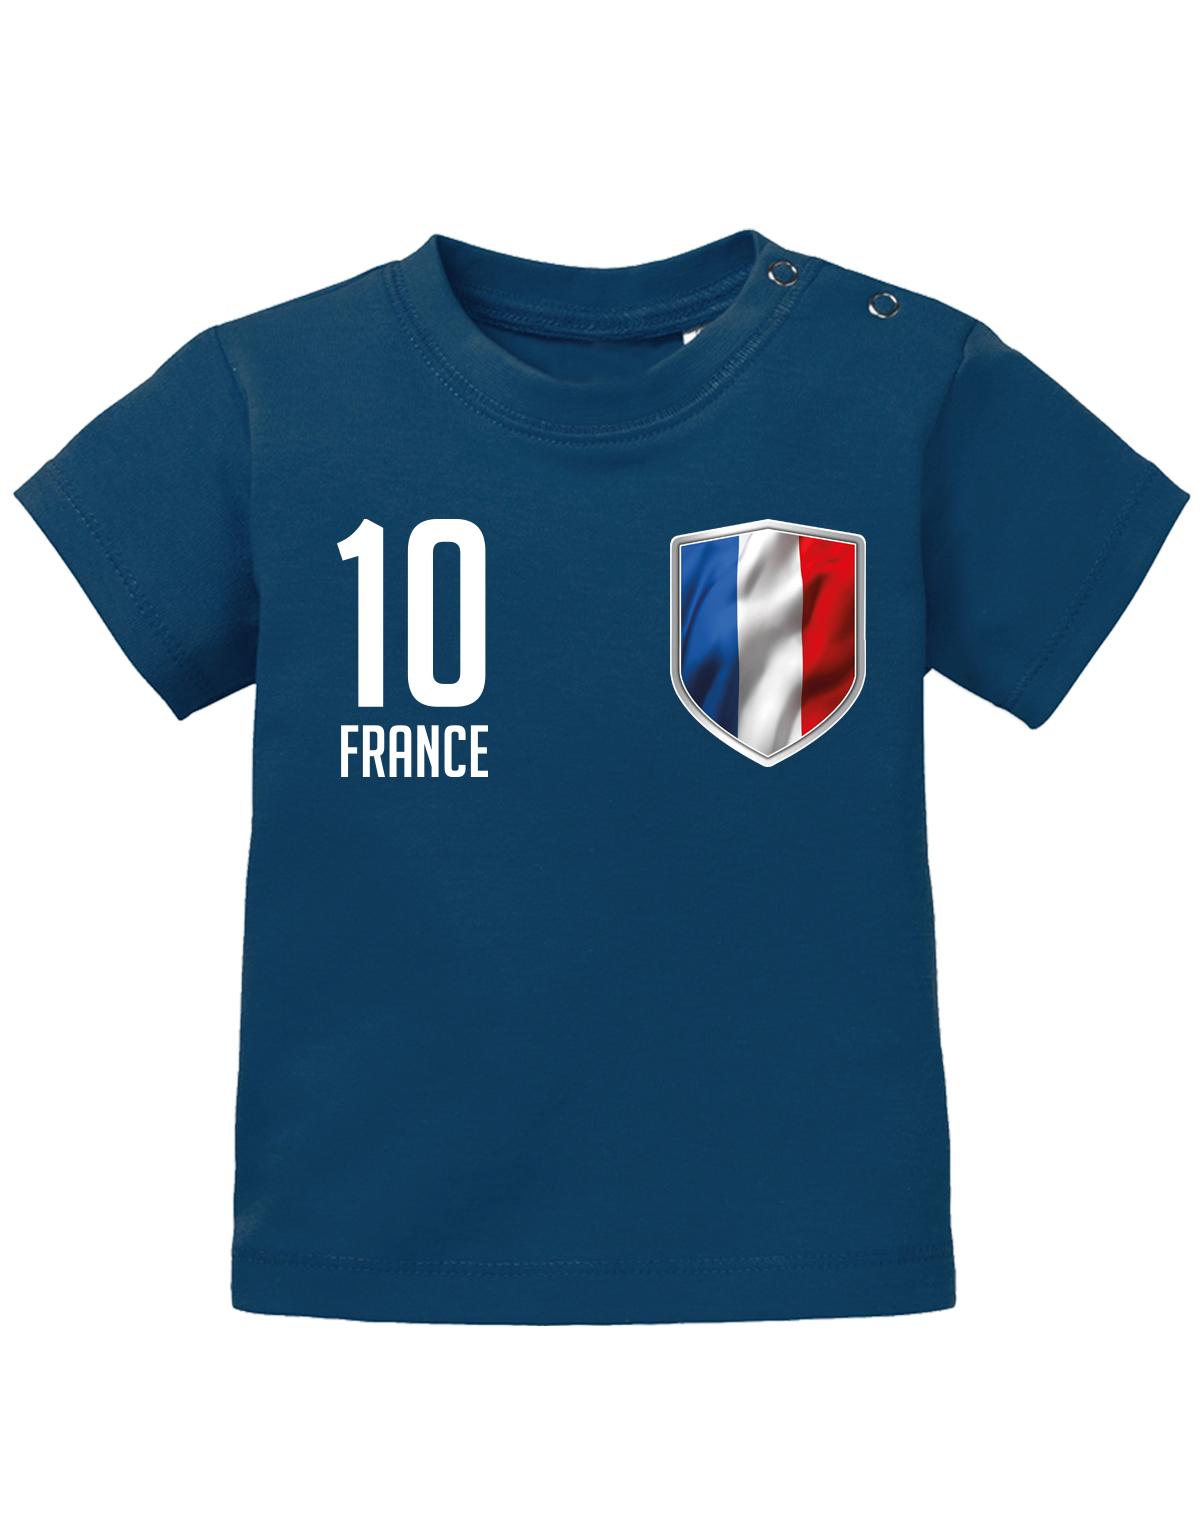 France-10-Baby-Shirt-Navy